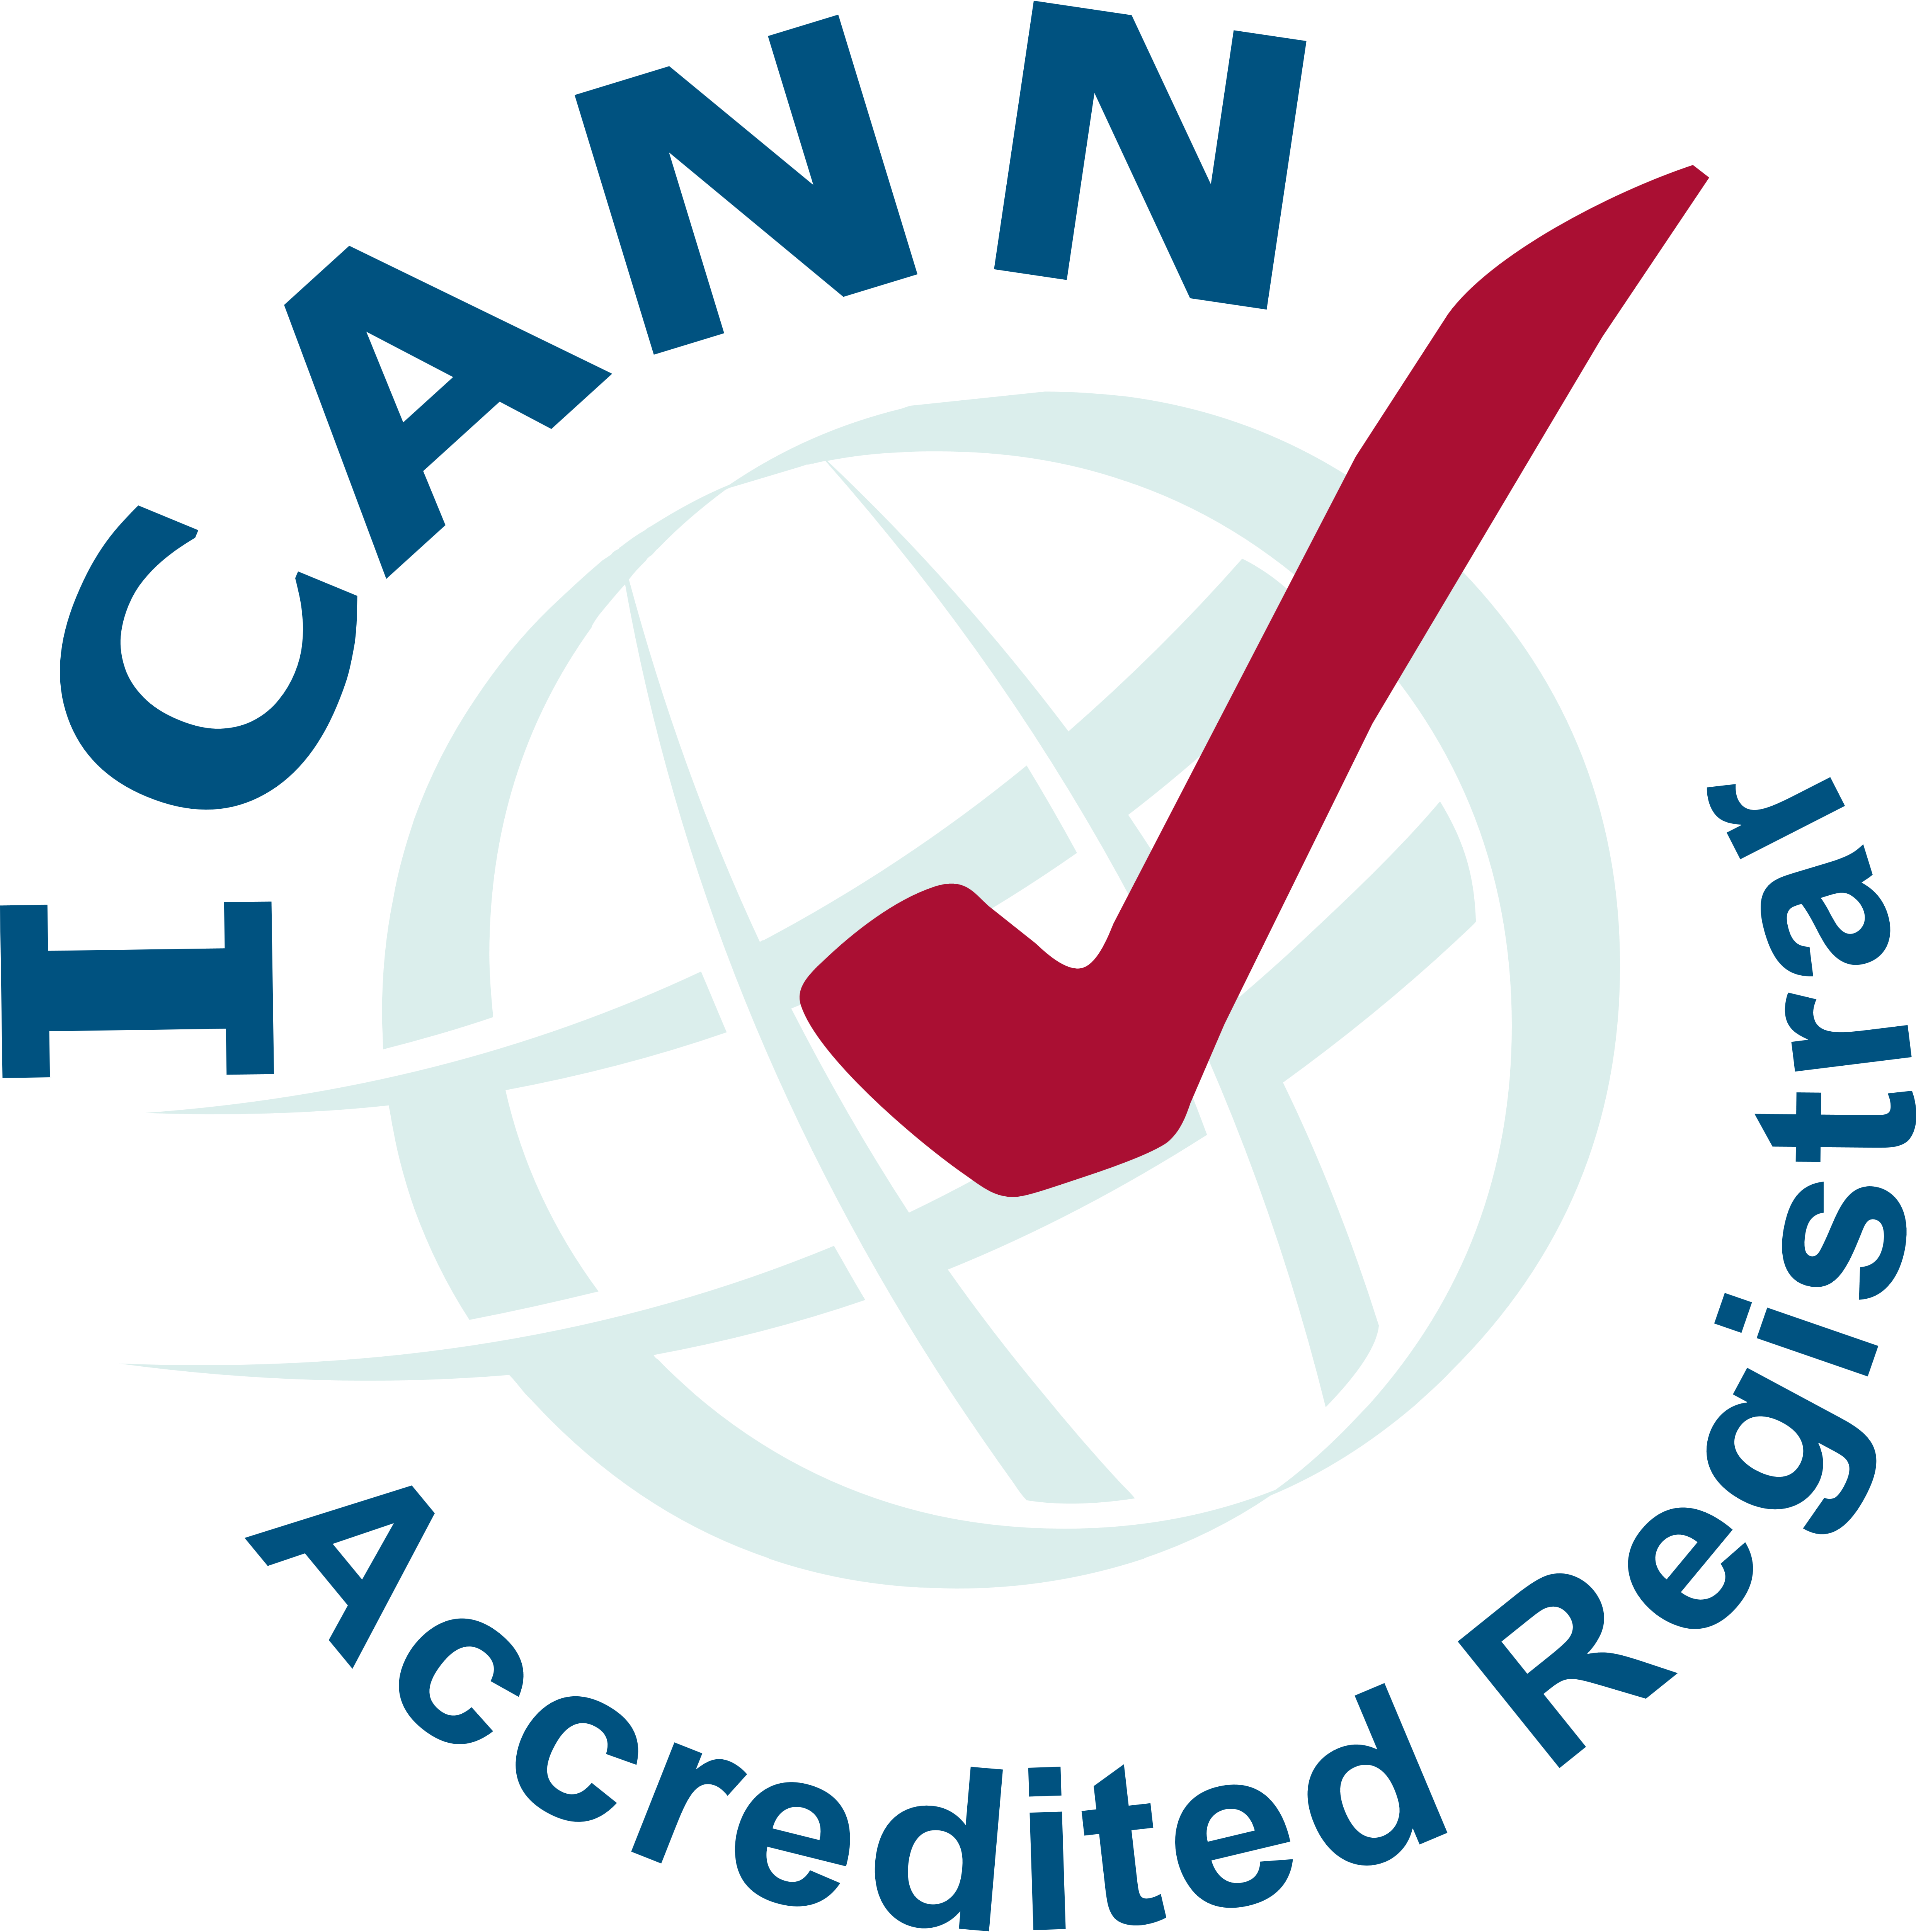 Icann Logo PNG - 99487